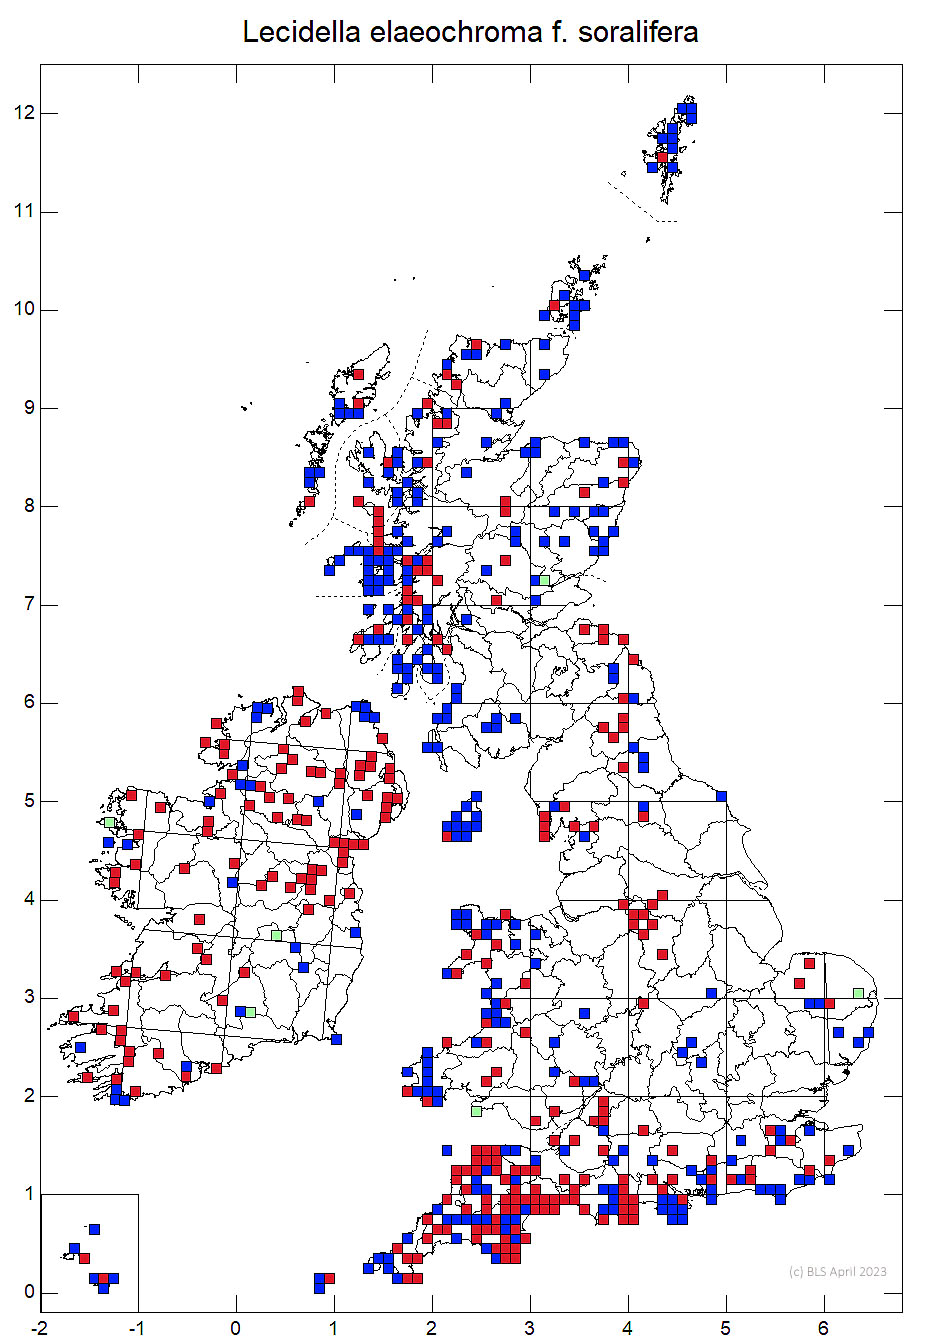 Lecidella elaeochroma f. soralifera 10km sq distribution map